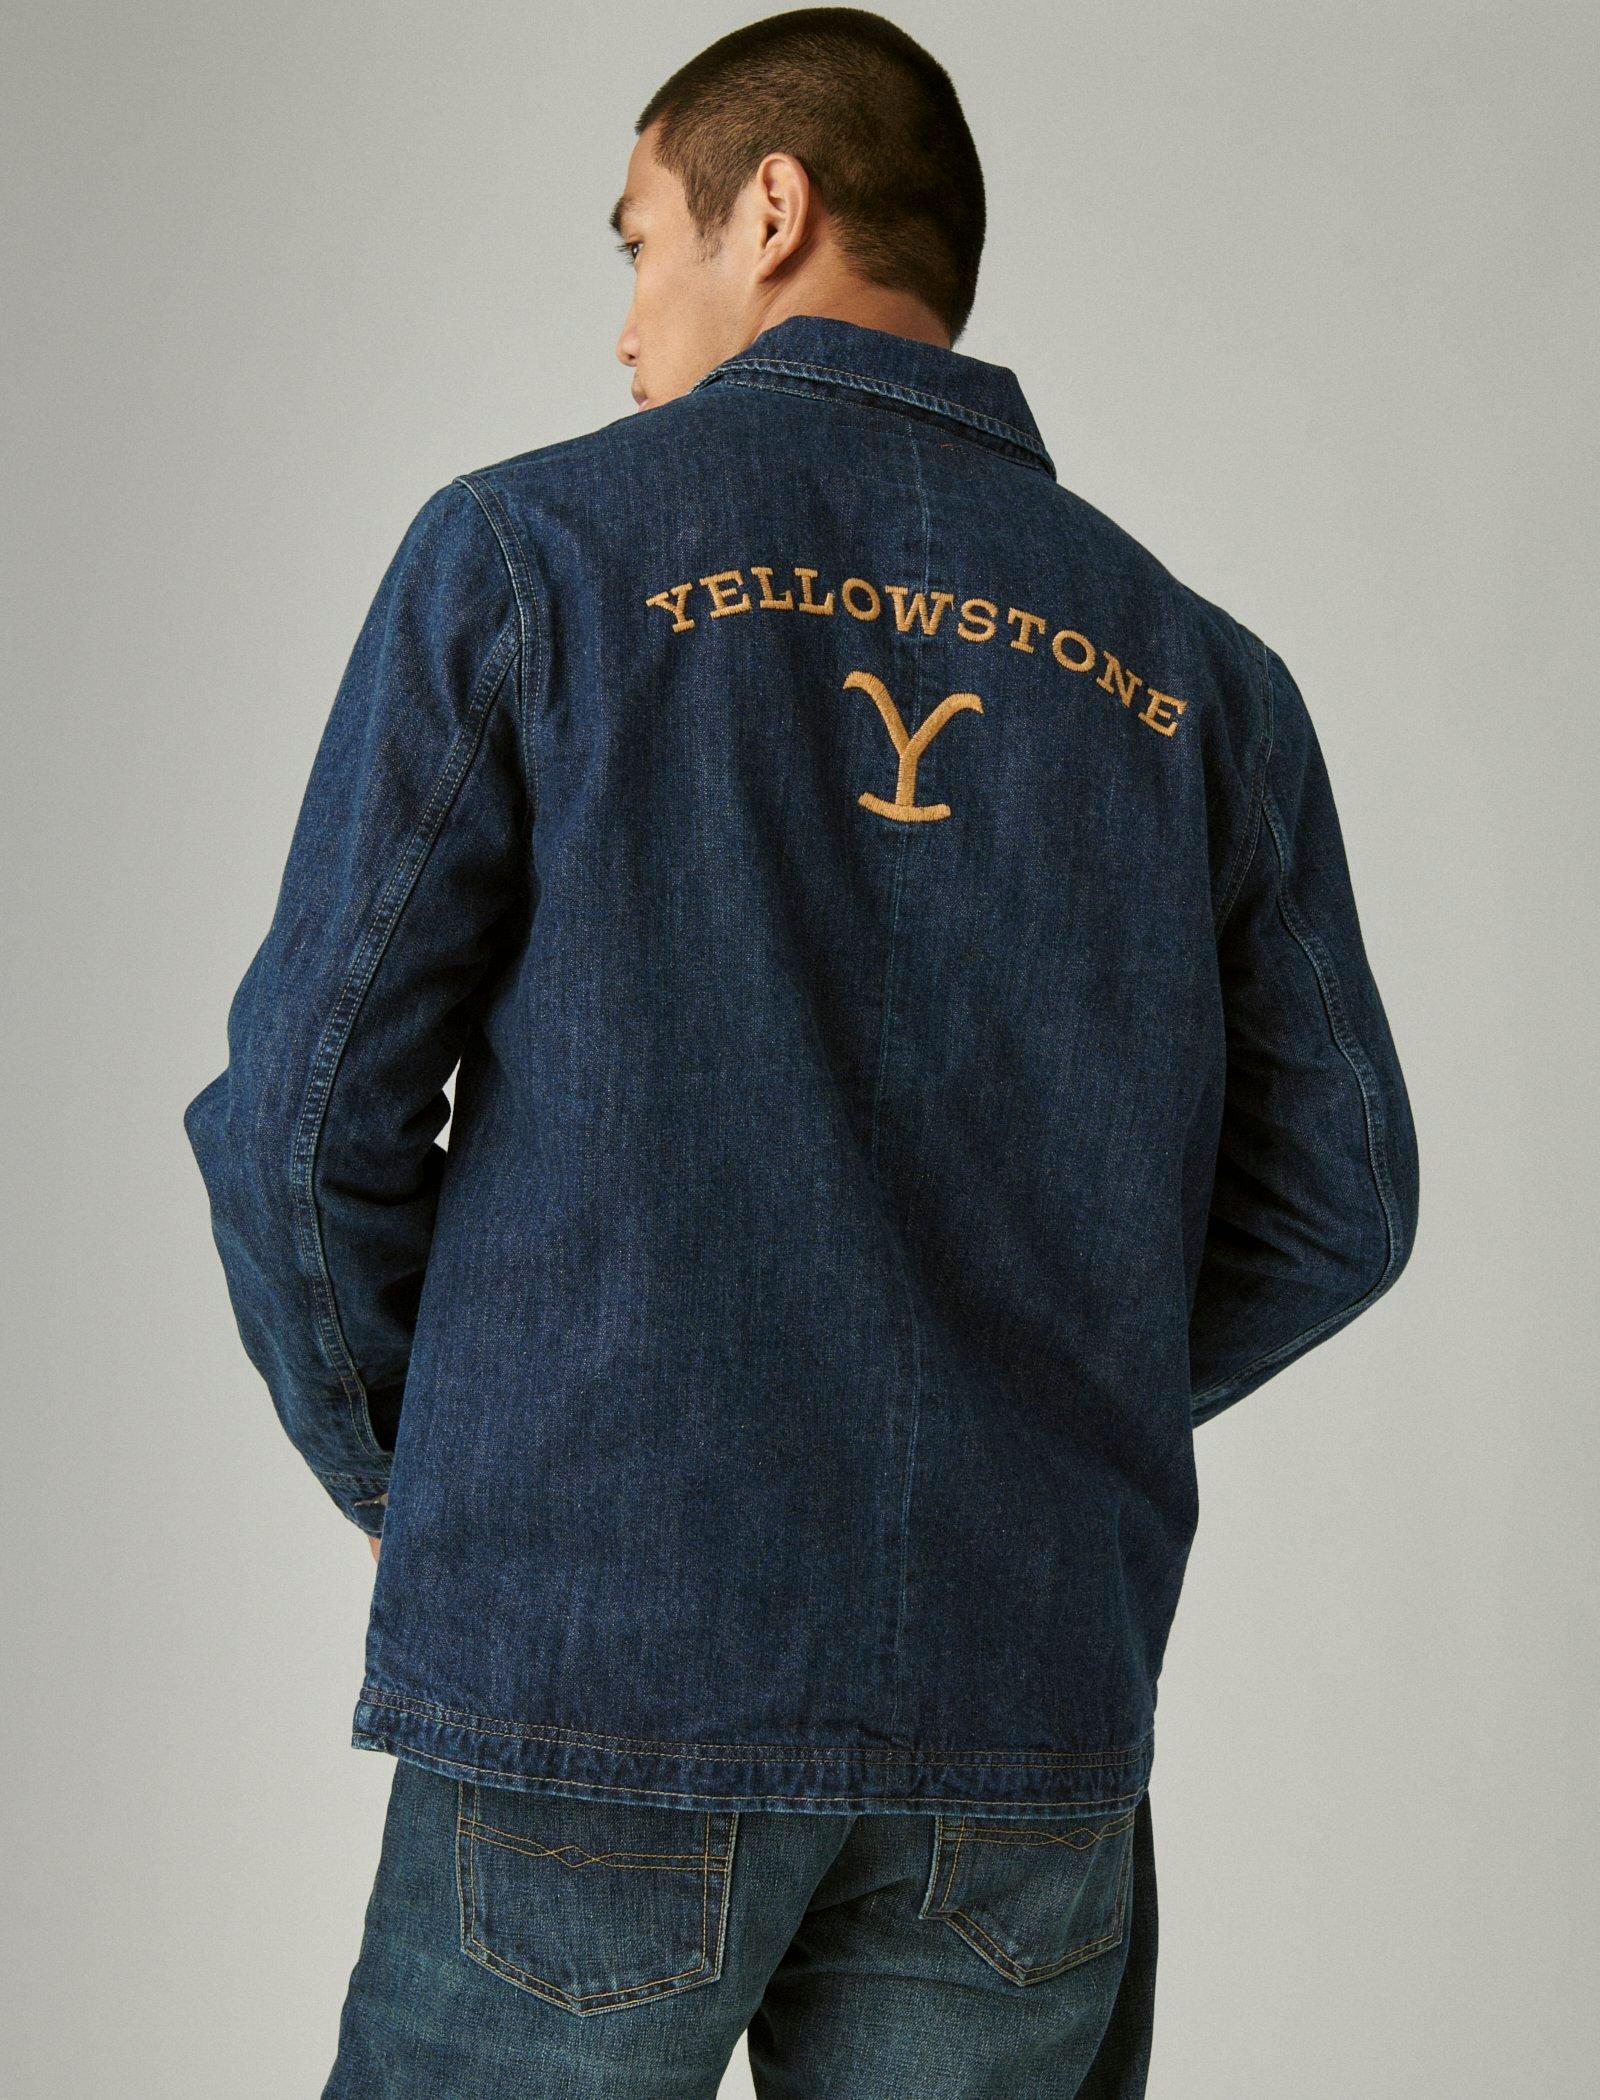 Lucky Brand Yellowstone Chore Jacket - Men's Clothing Outerwear Jackets Coats Flathead Valley